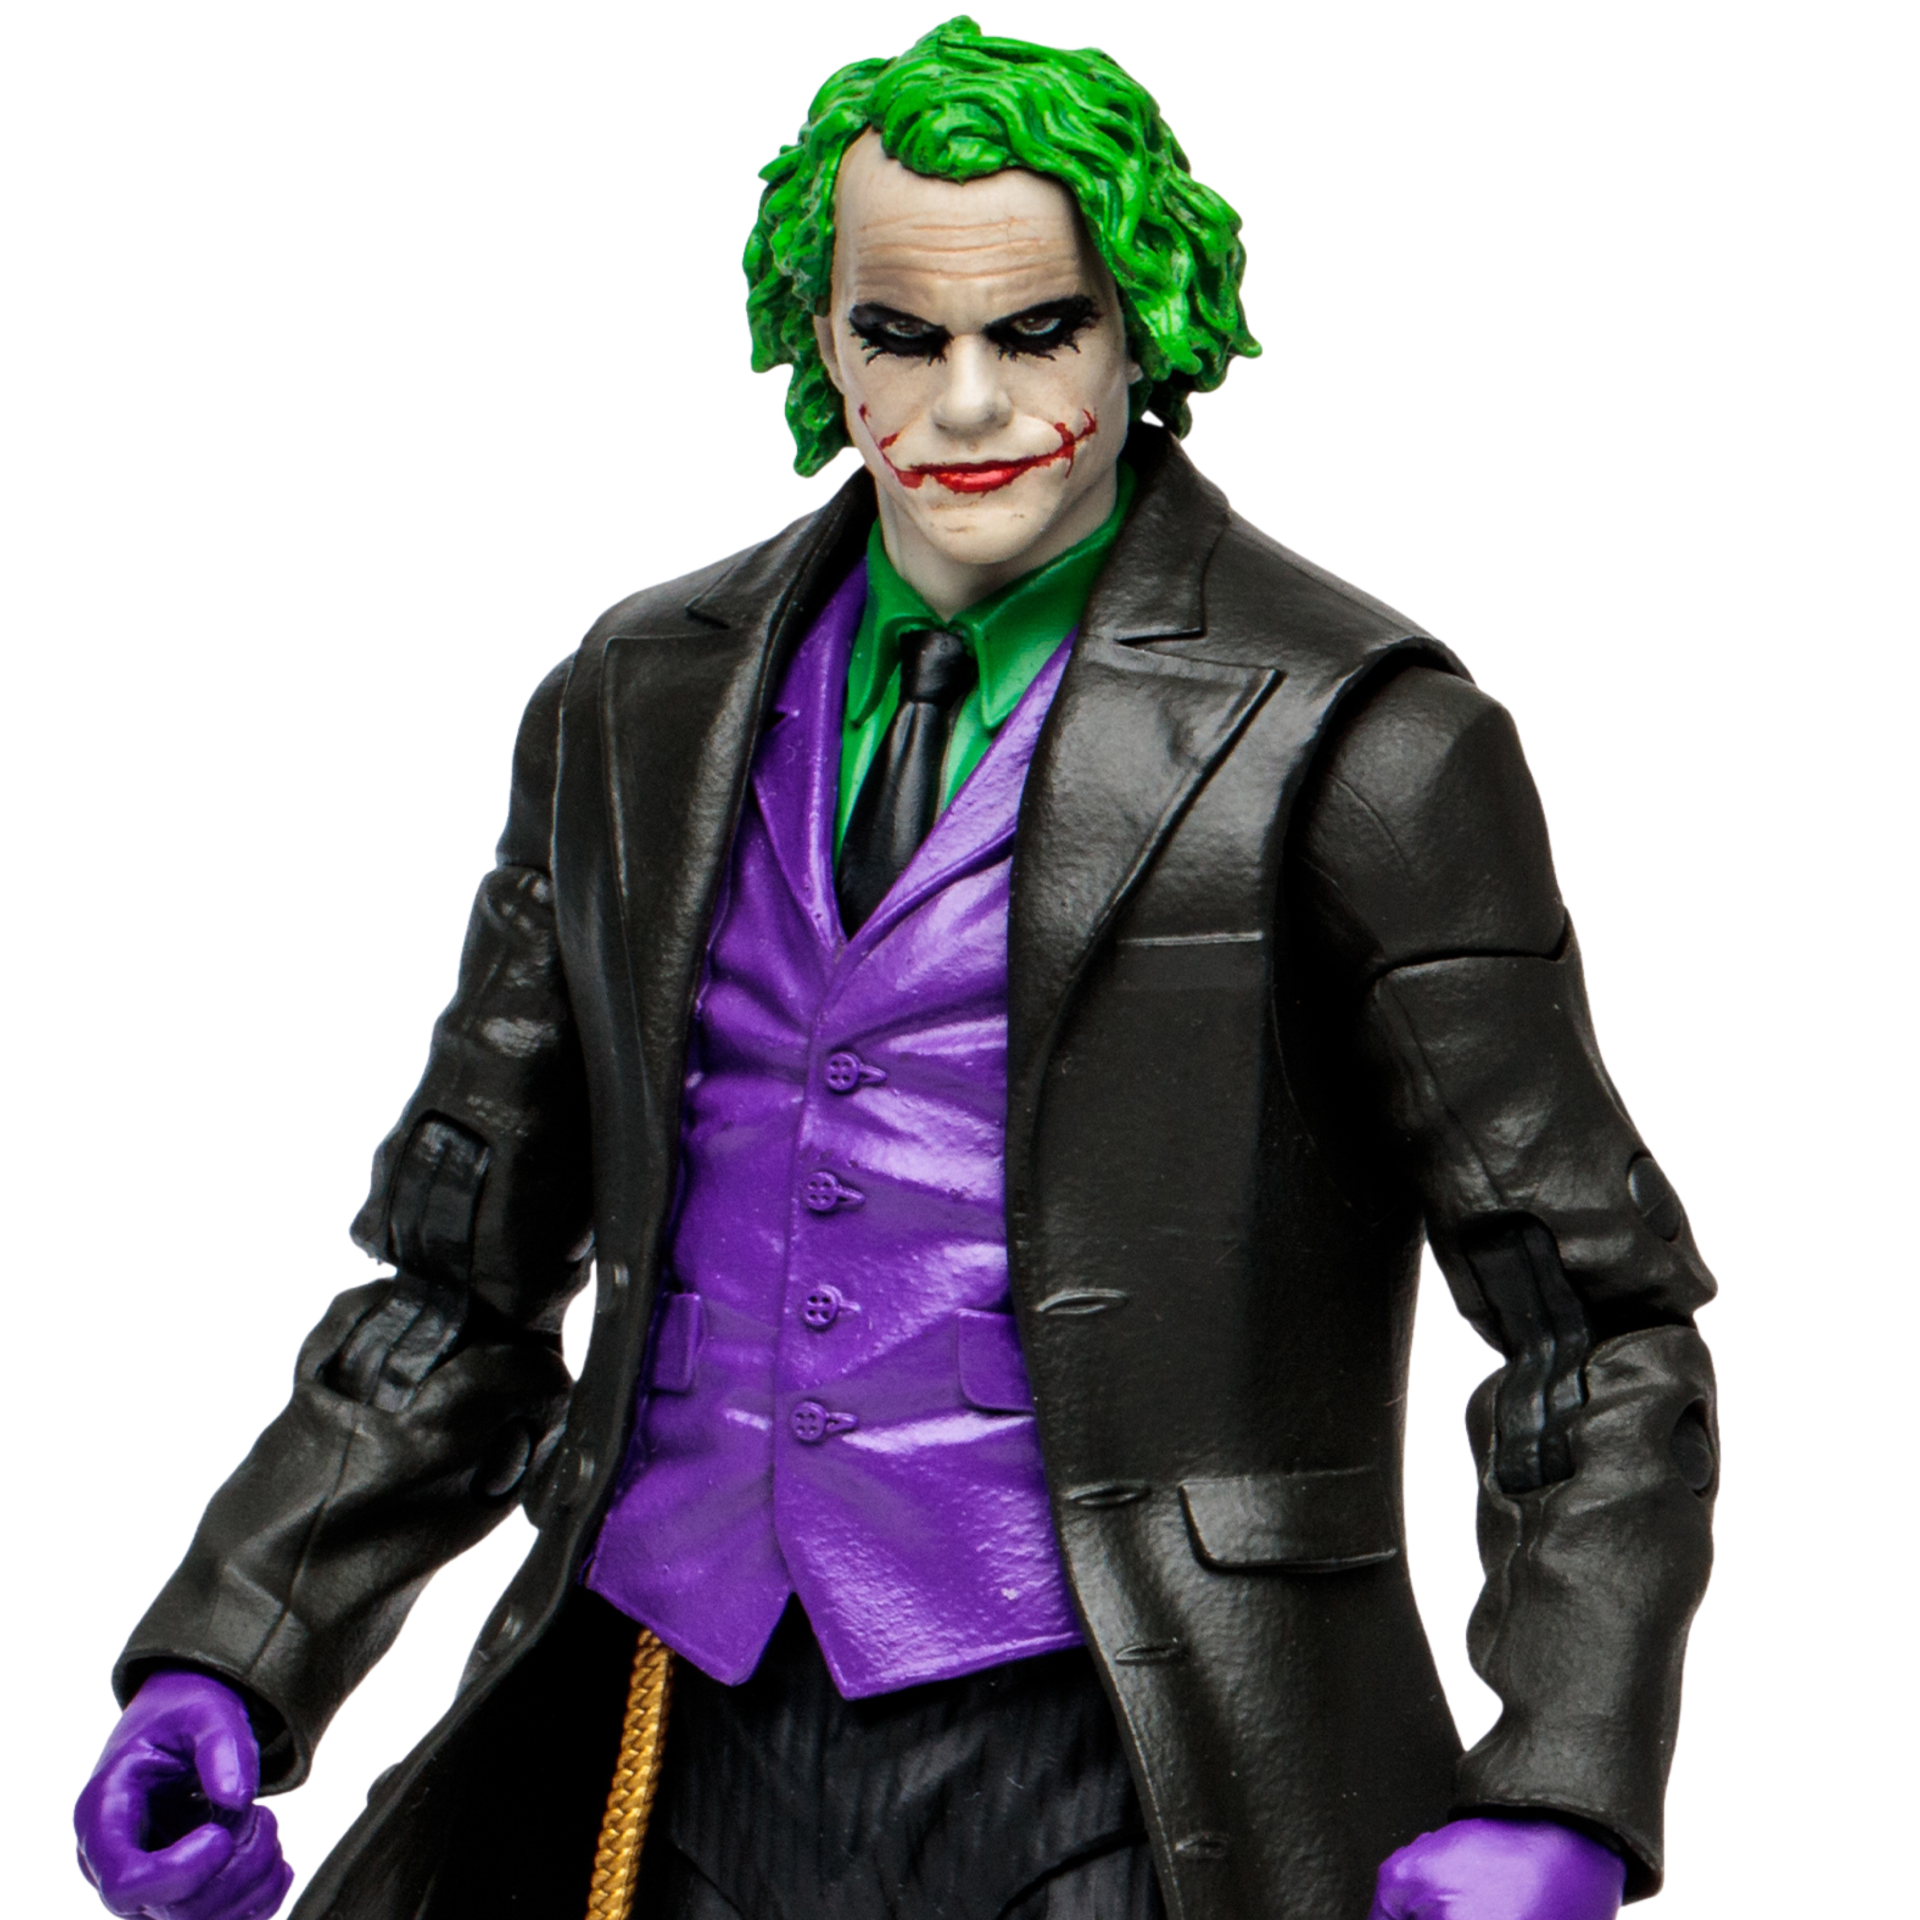 DC Multiverse Jokerized Gold Label - The Dark Knight Trilogy Movie: The Joker - (Limited Edition) Aksiyon Figür (Build A Figure Bane)